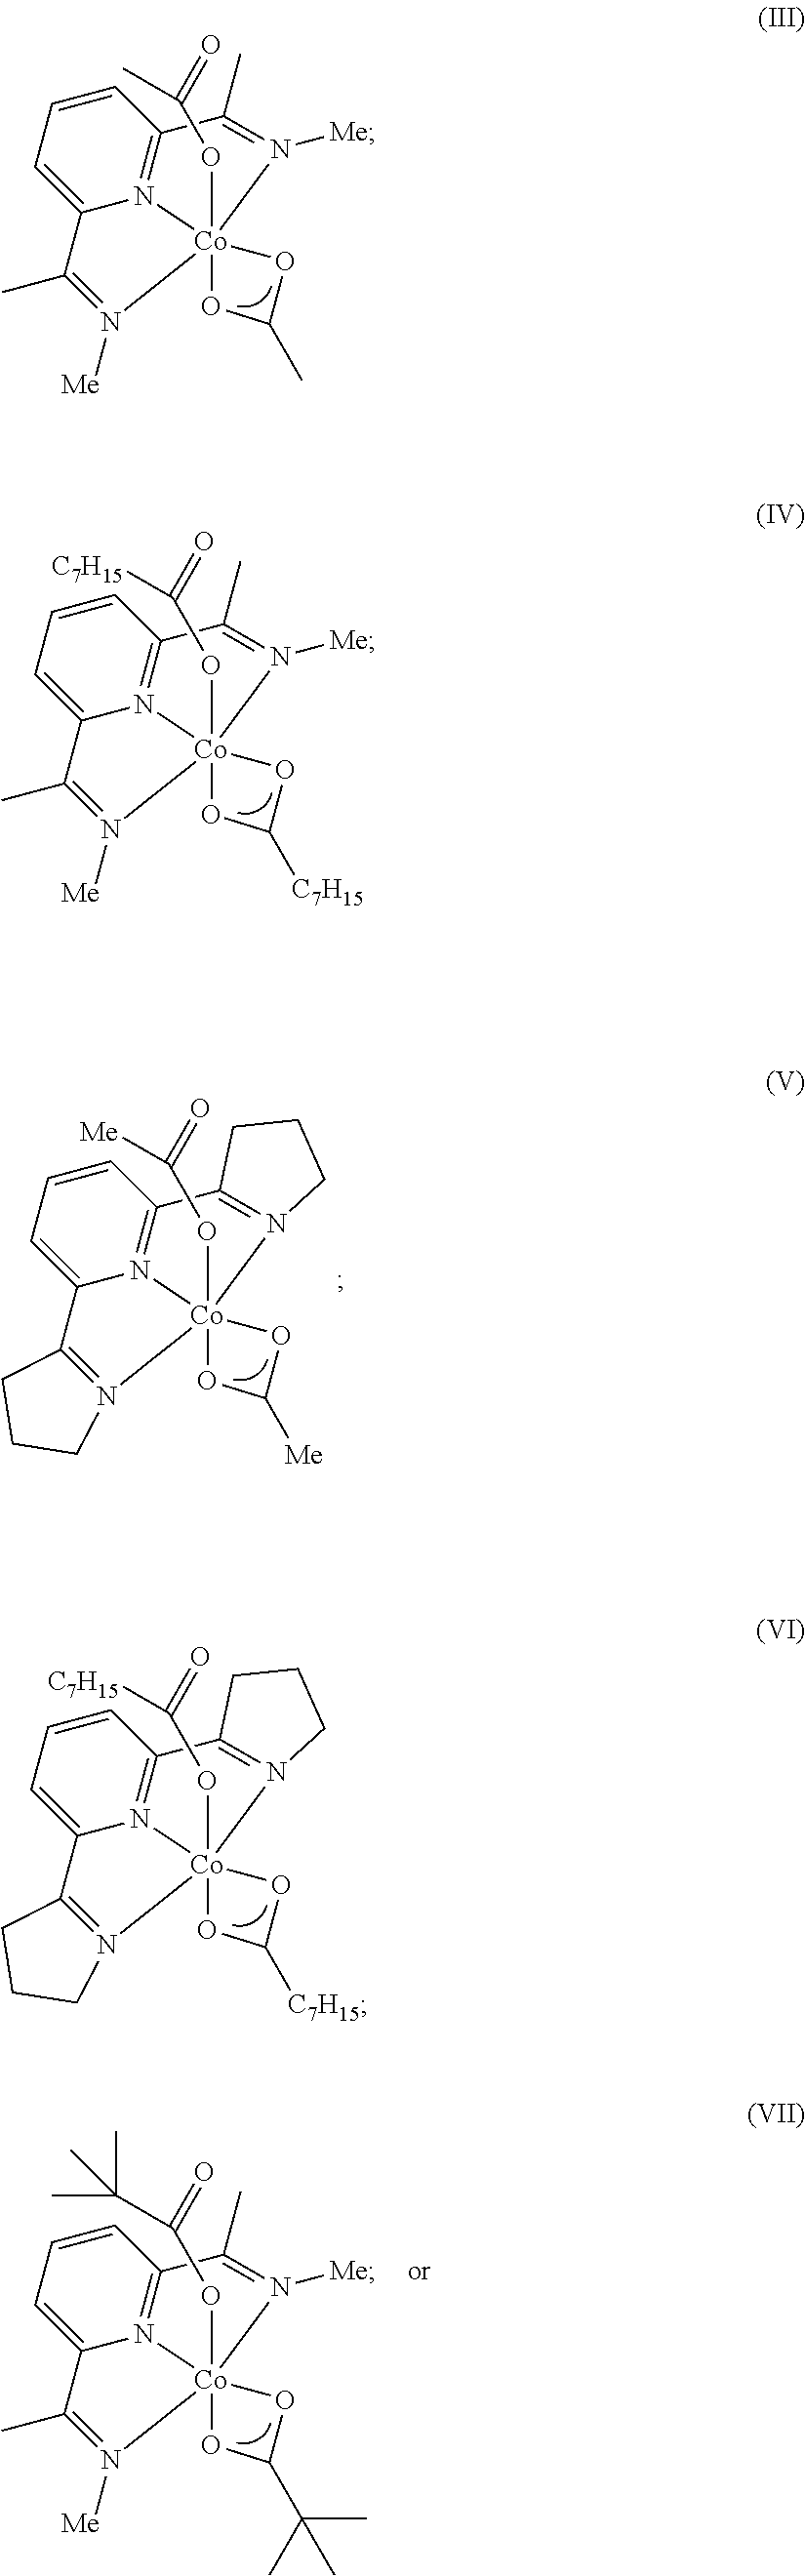 Dehydrogenative silylation, hydrosilylation and crosslinking using pyridinediimine cobalt carboxylate catalysts